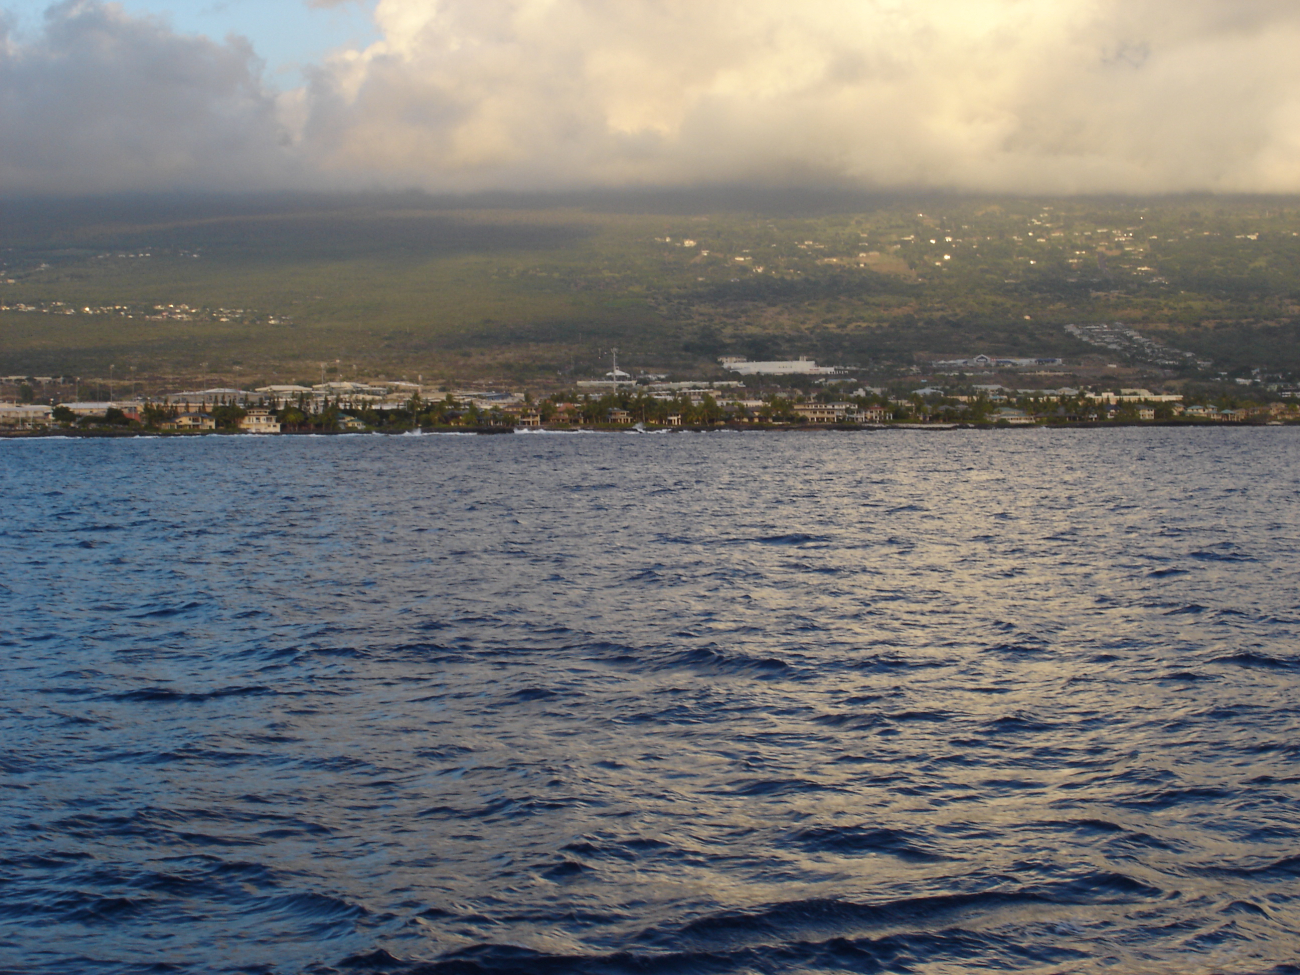 The Kona Coast of Hawaii as seen from the NOAA ship OSCAR ELTON SETTE